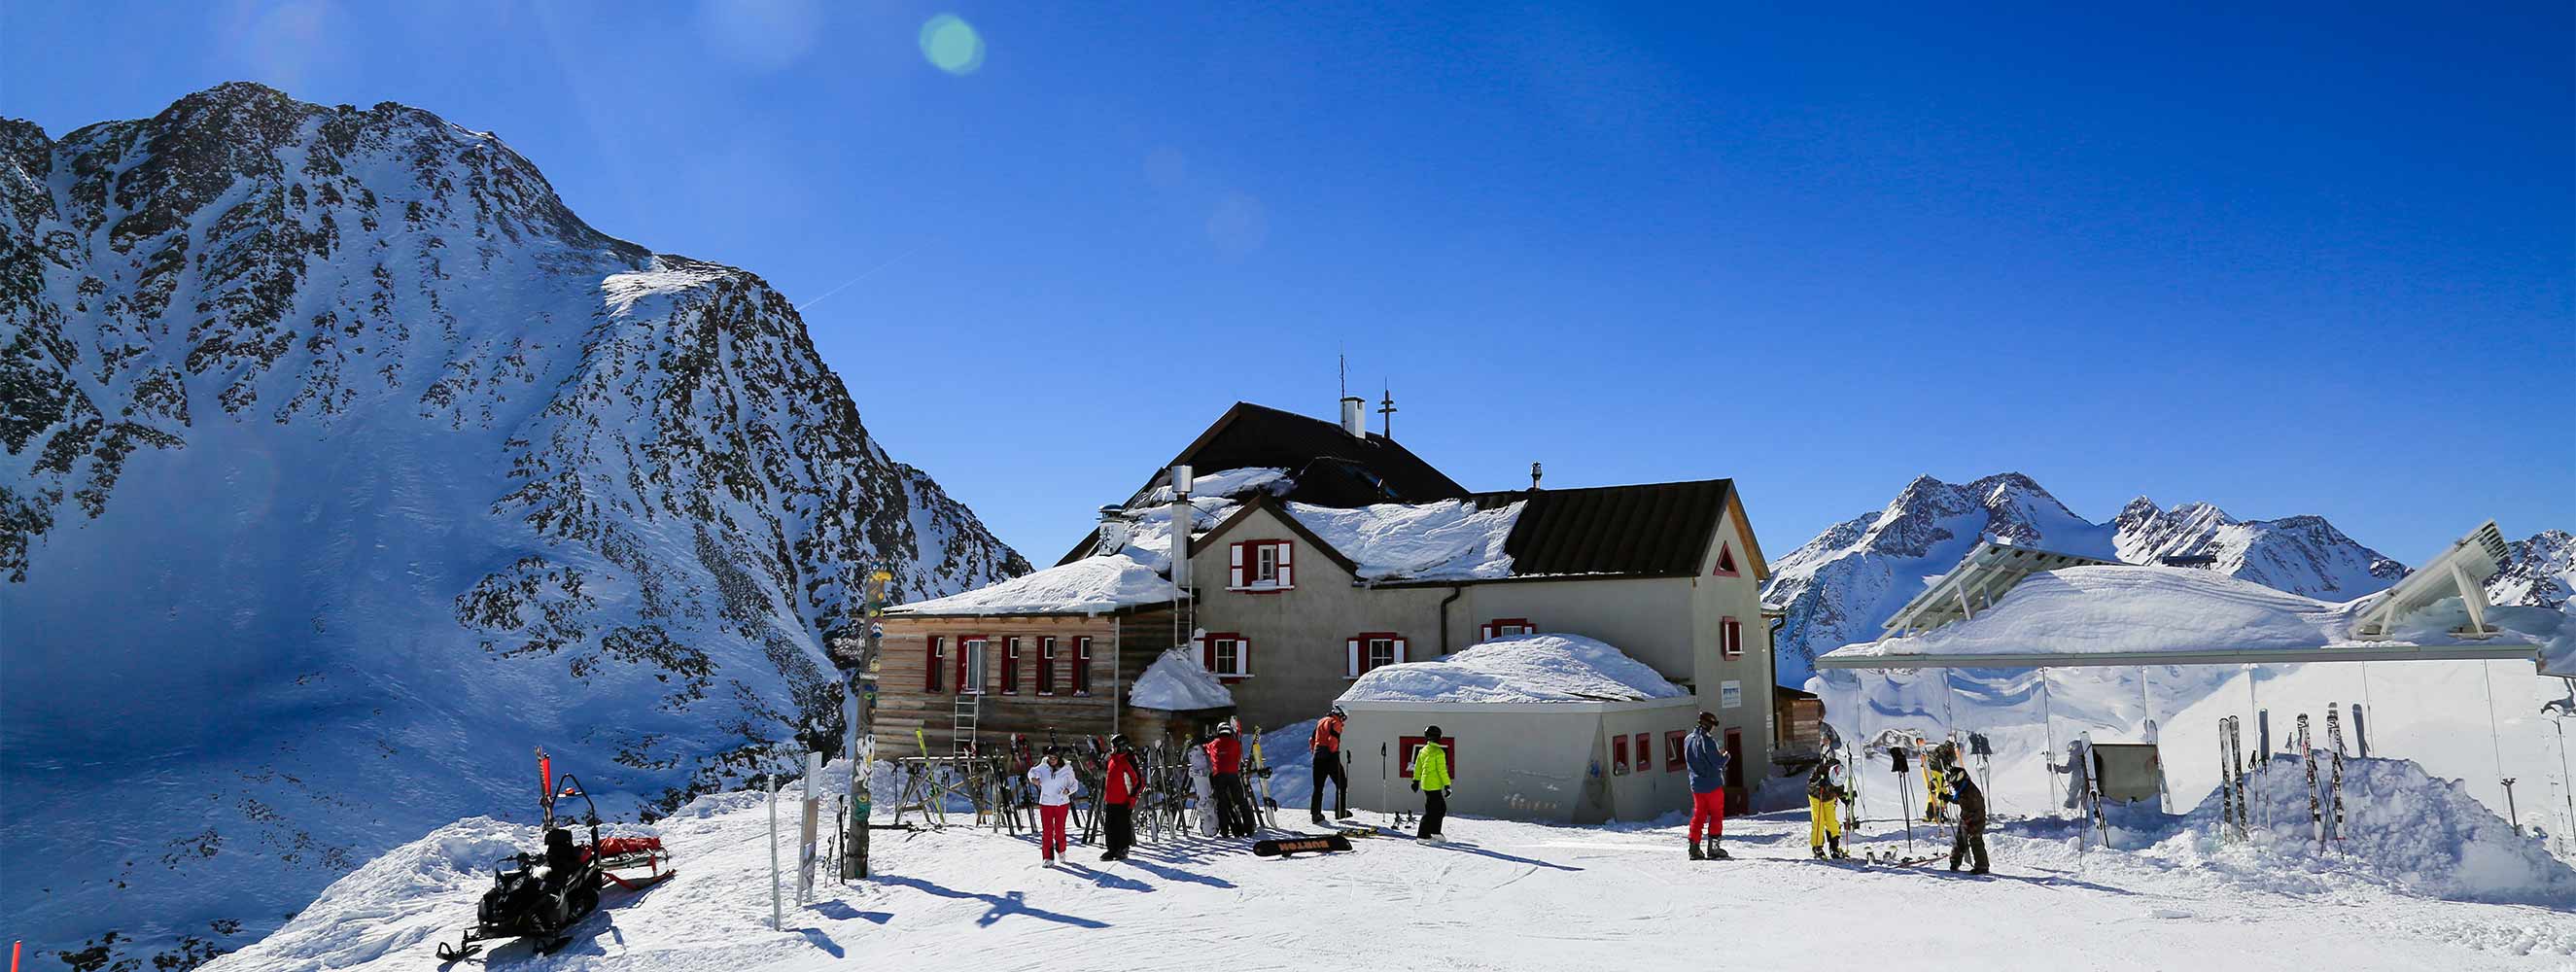 Vacanze invernali in Val Senales in Alto Adige